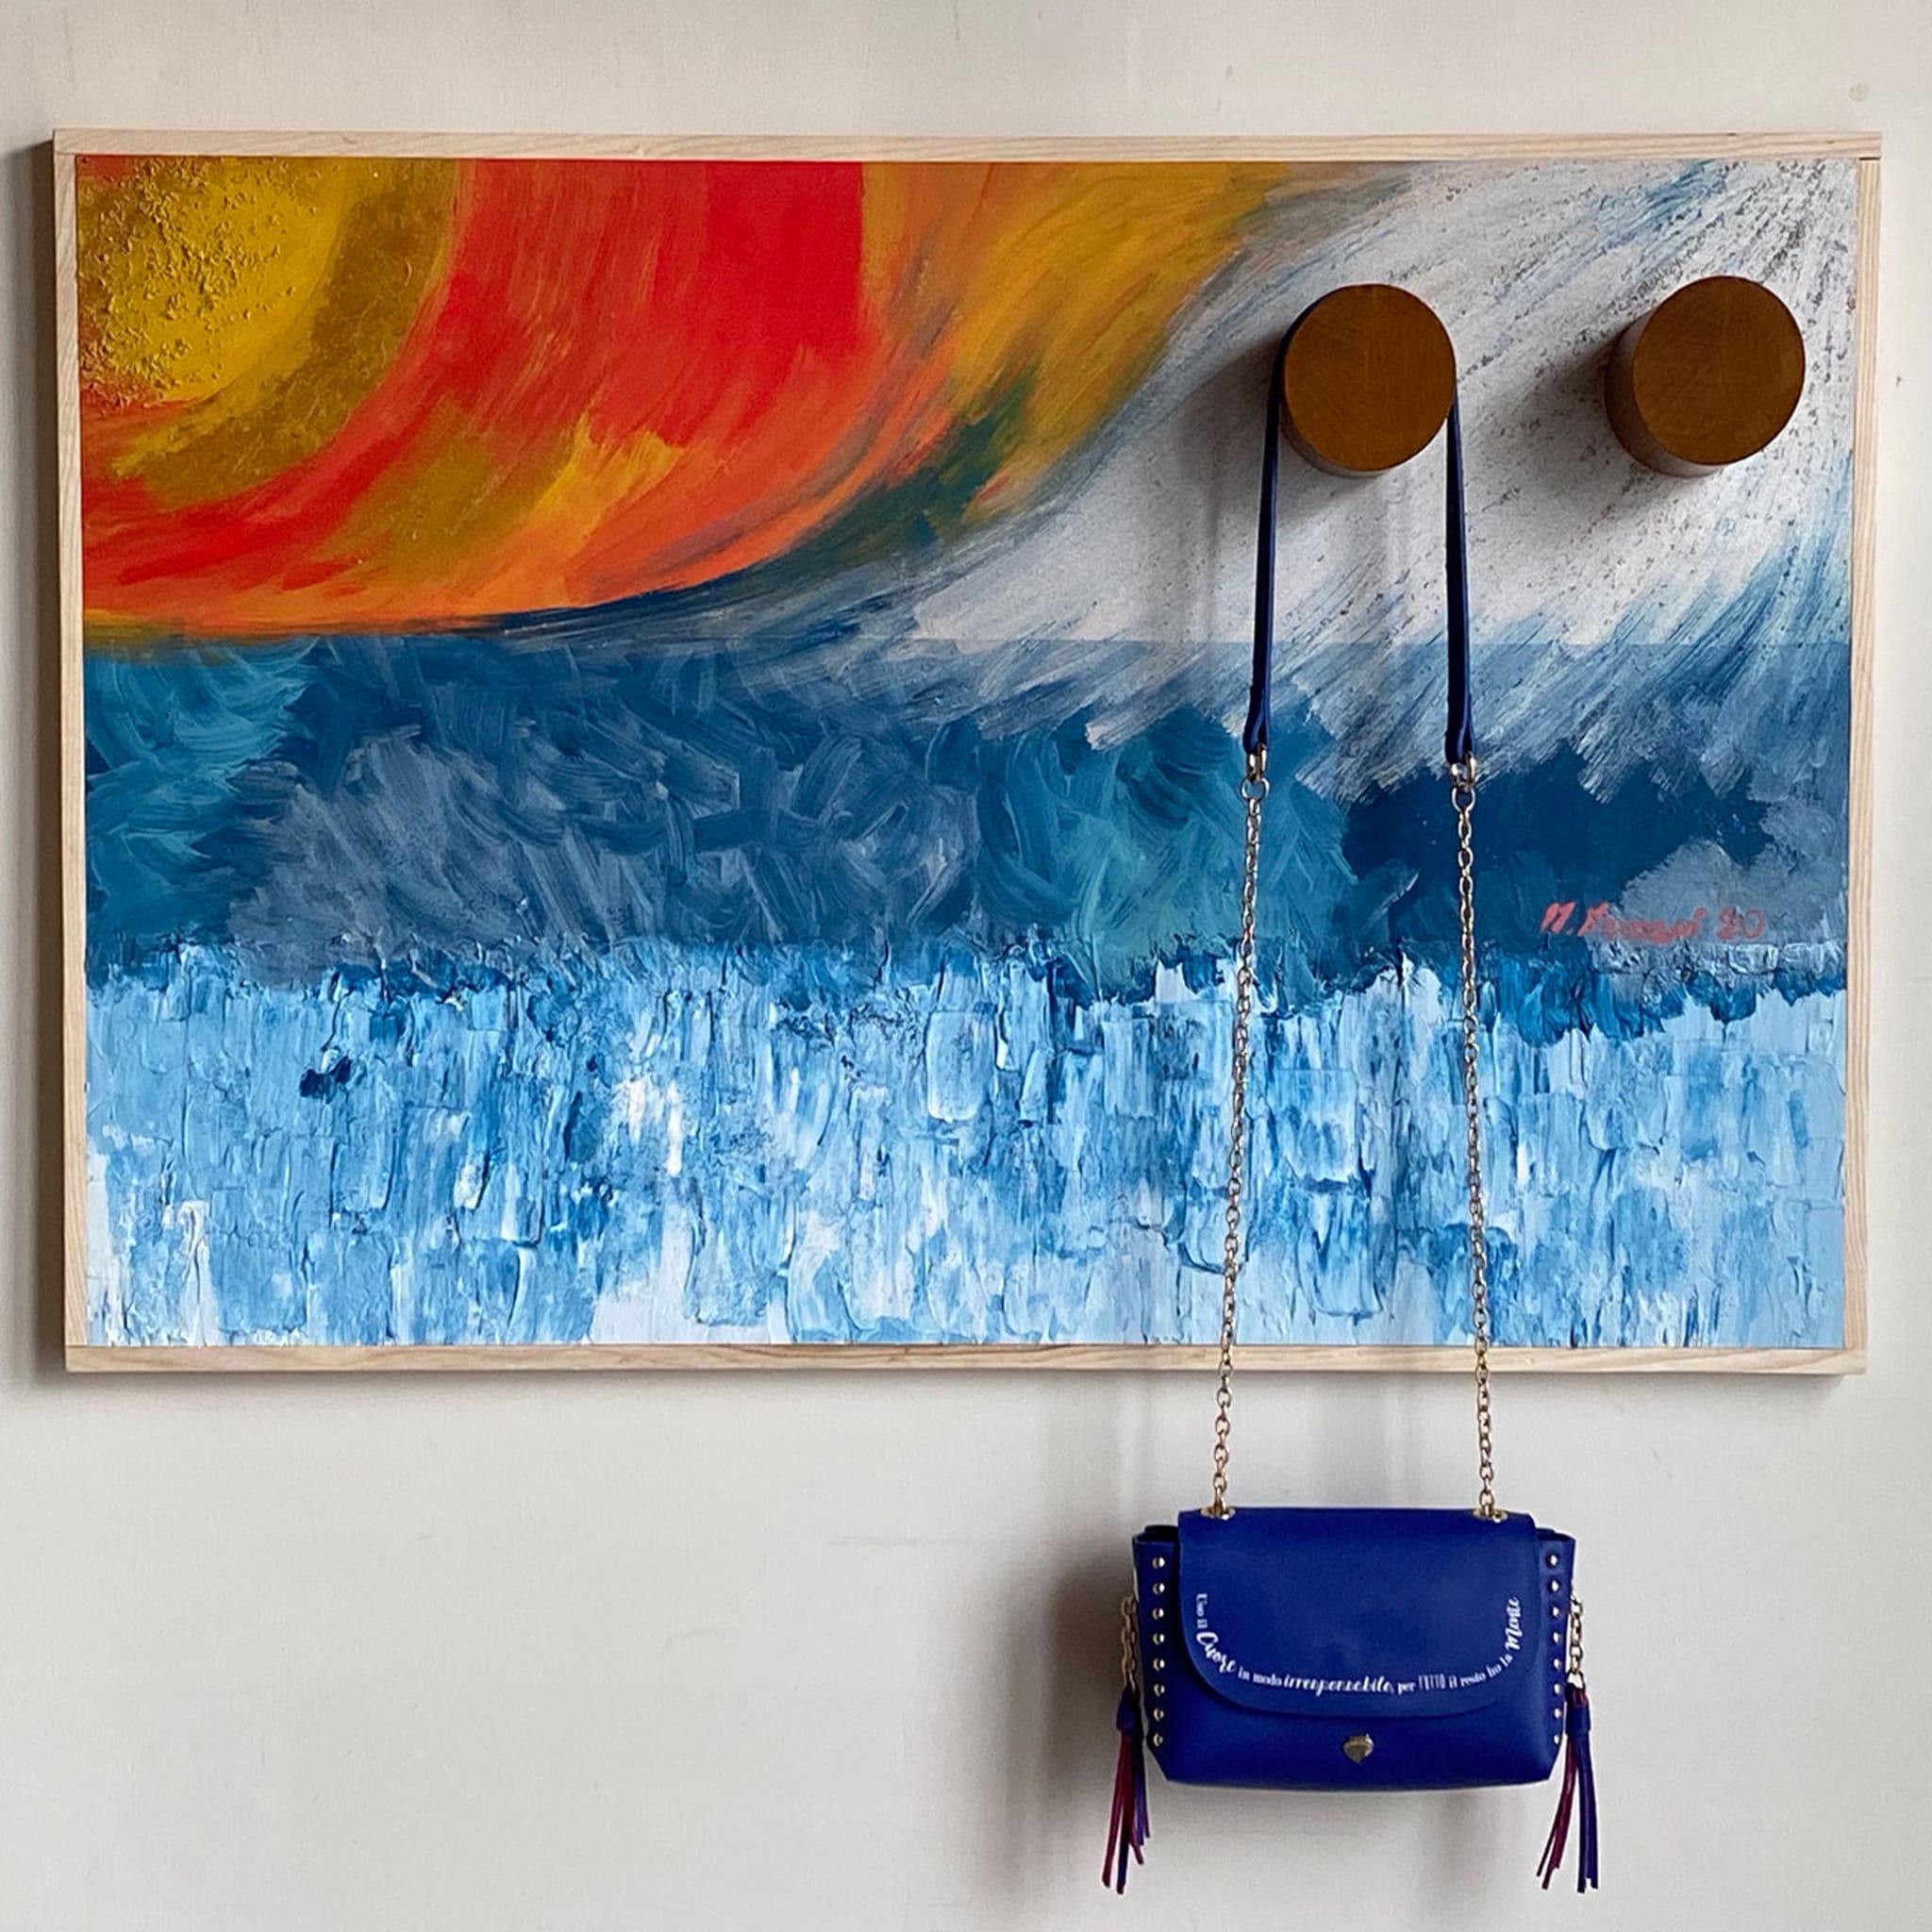 Orizzonti Decorative Panel and Wall Hanger by Mascia Meccani - Alternative view 1